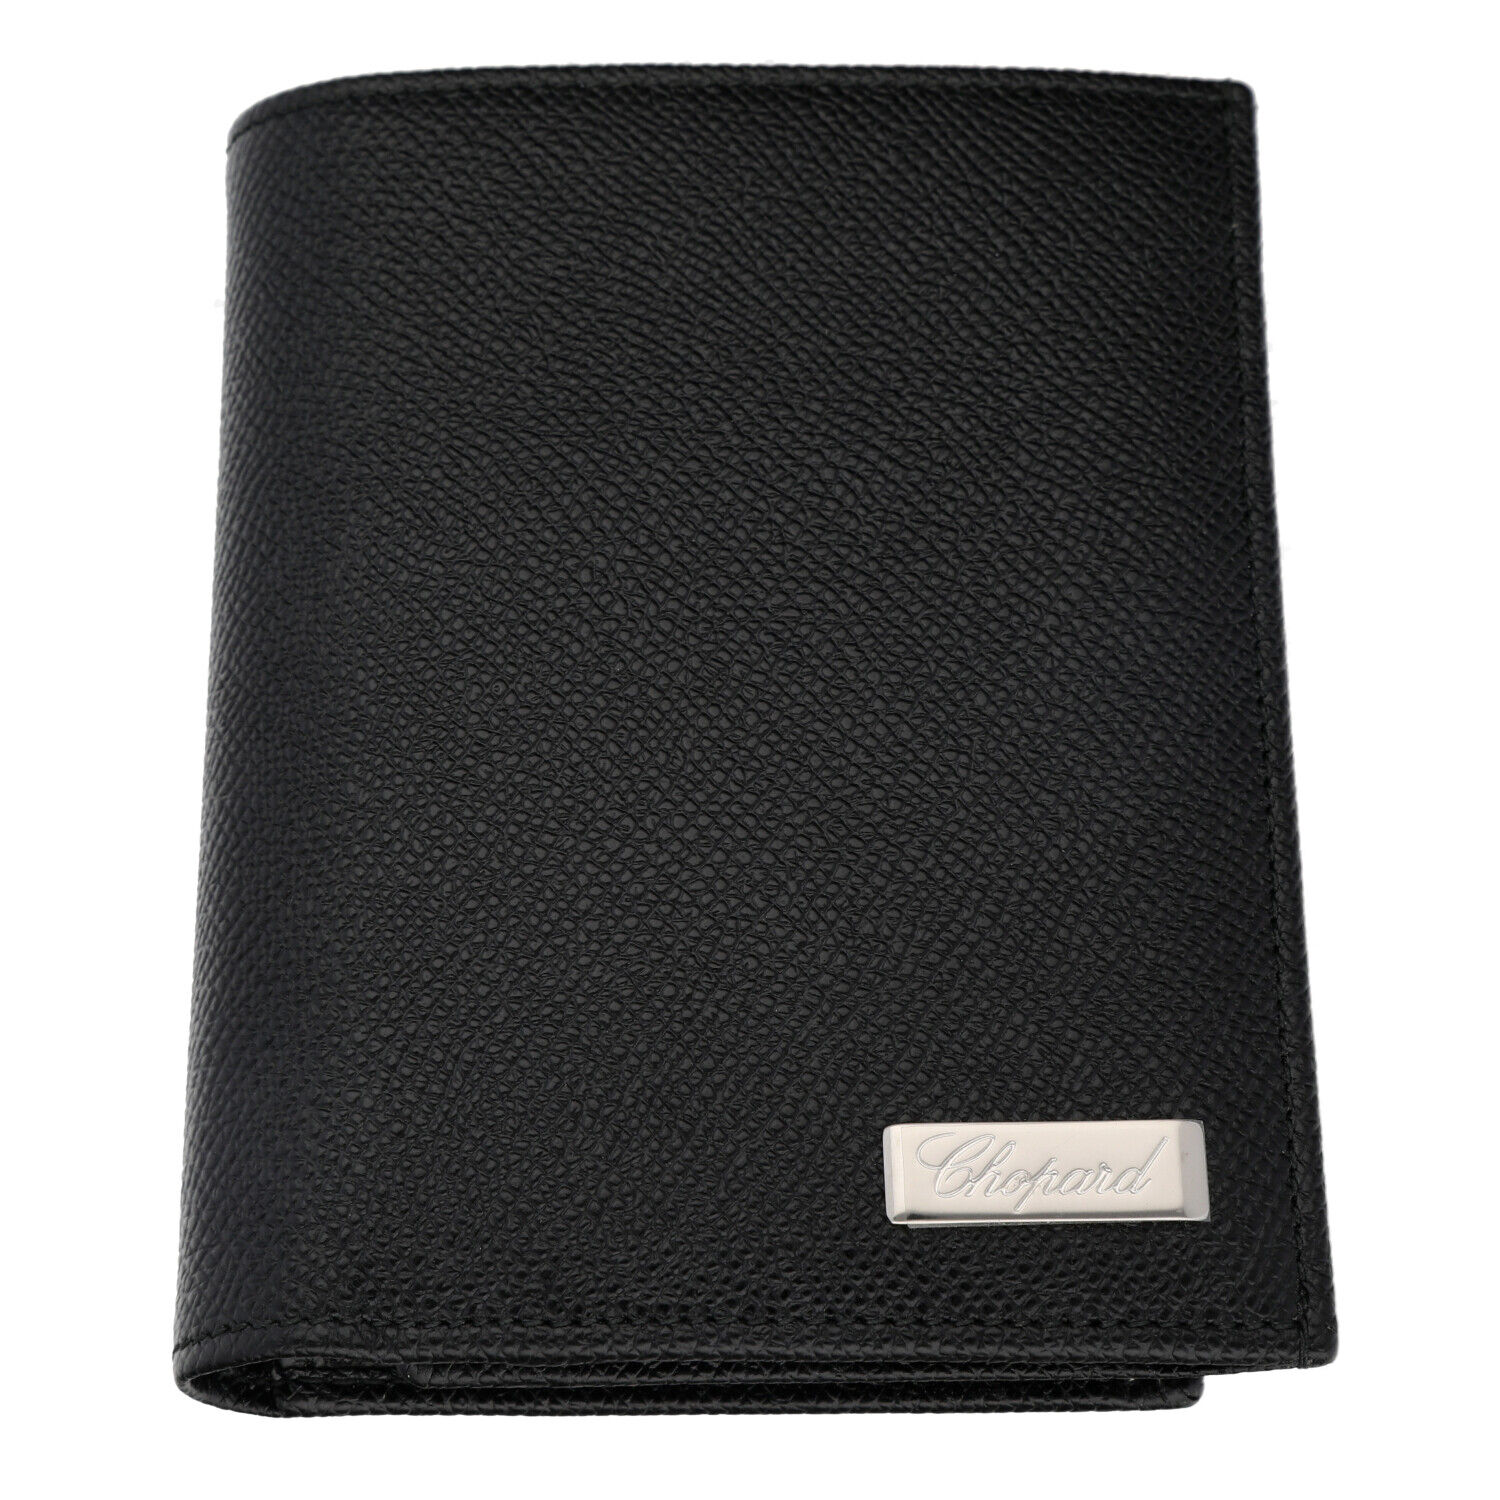 Chopard-95012-0078-Black-Calf-Leather-Bifold-Wallet-Mens-Accessories-4x5-115116175735